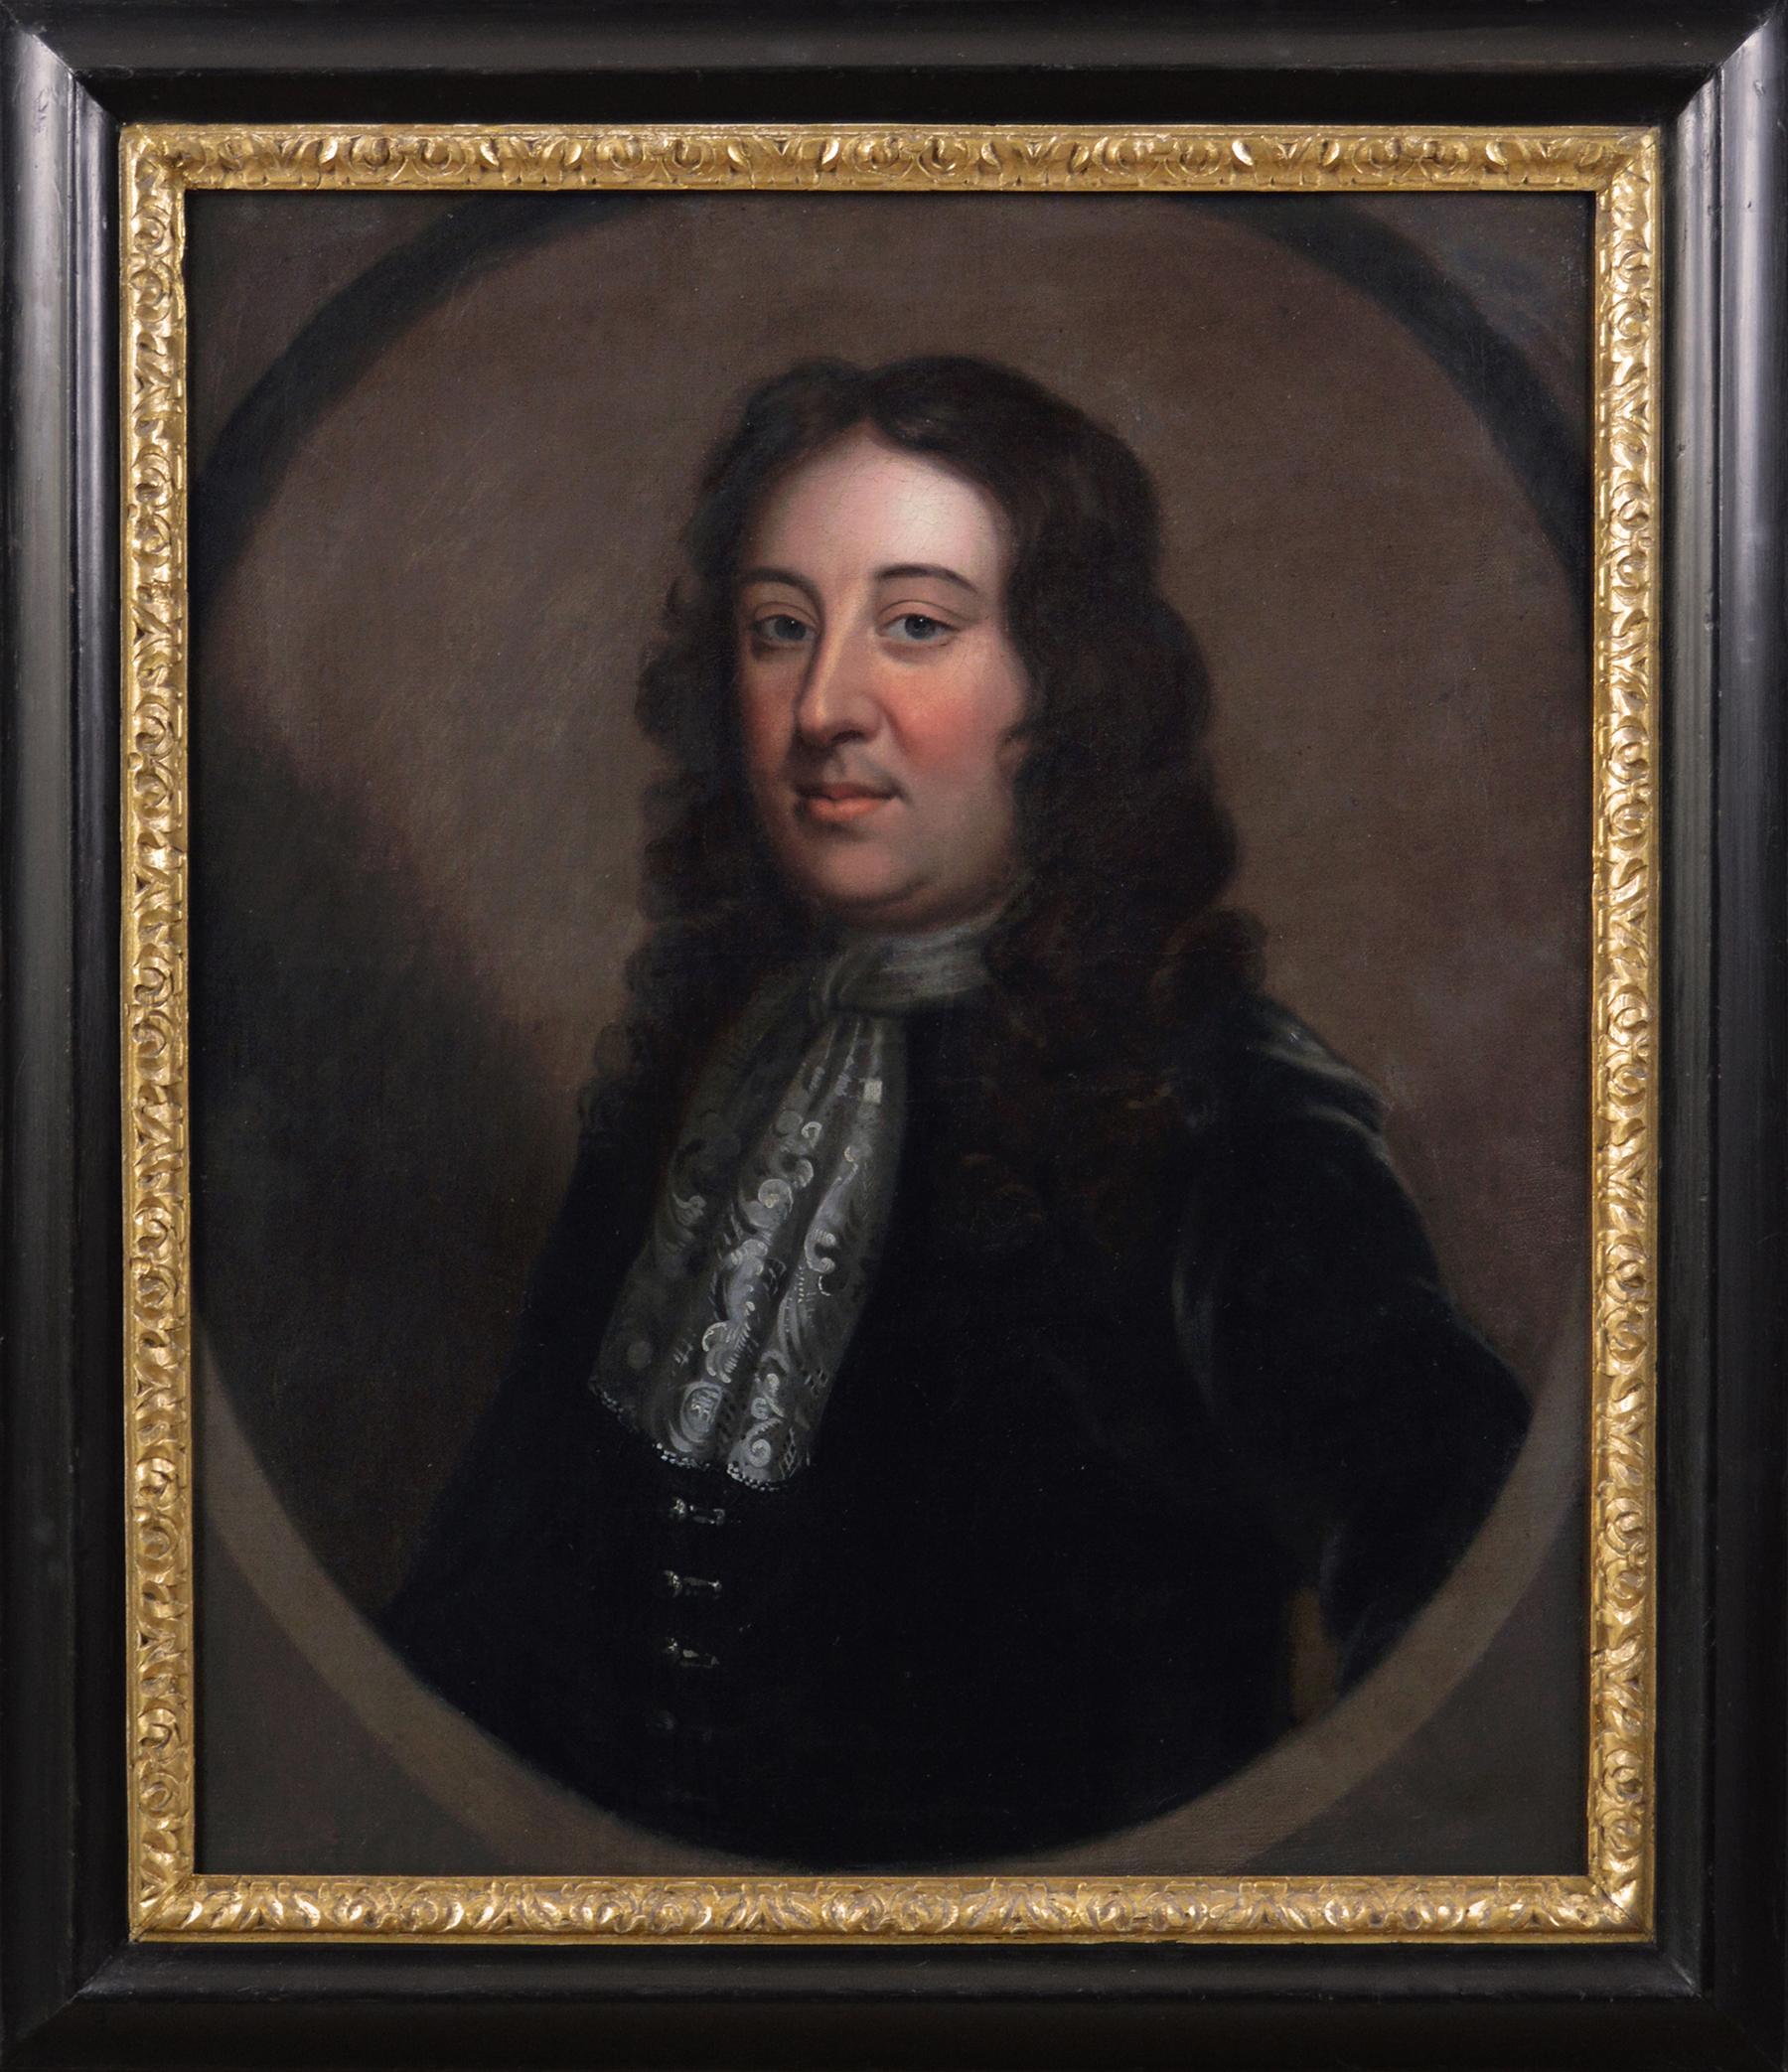 John Riley Portrait Painting - 17th Century portrait oil painting of a gentleman